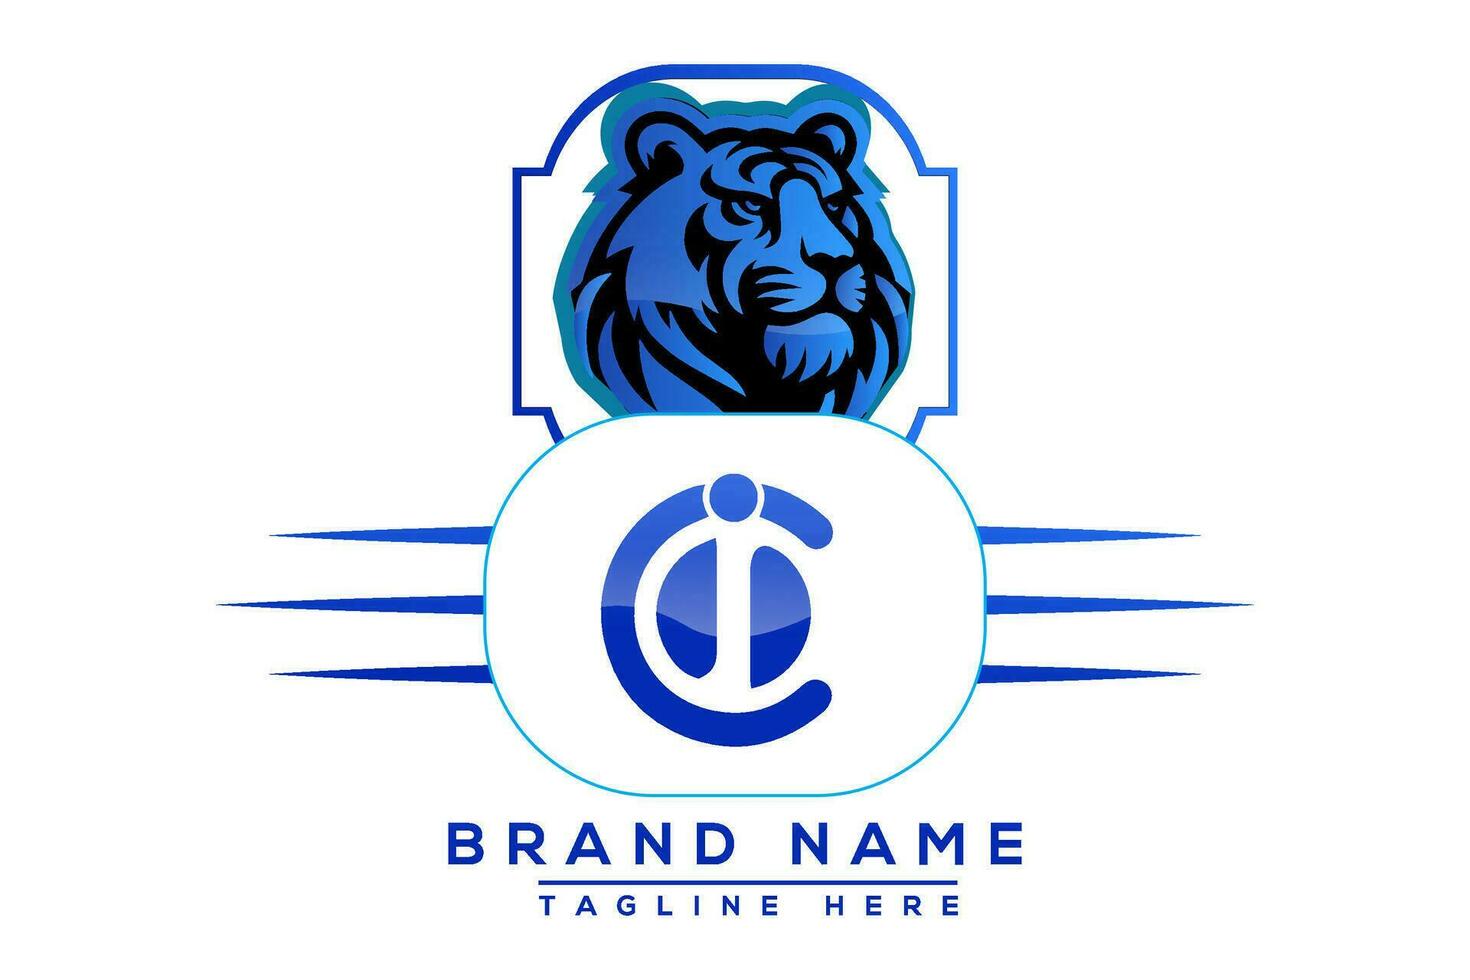 ci tigre logo bleu conception. vecteur logo conception pour entreprise.